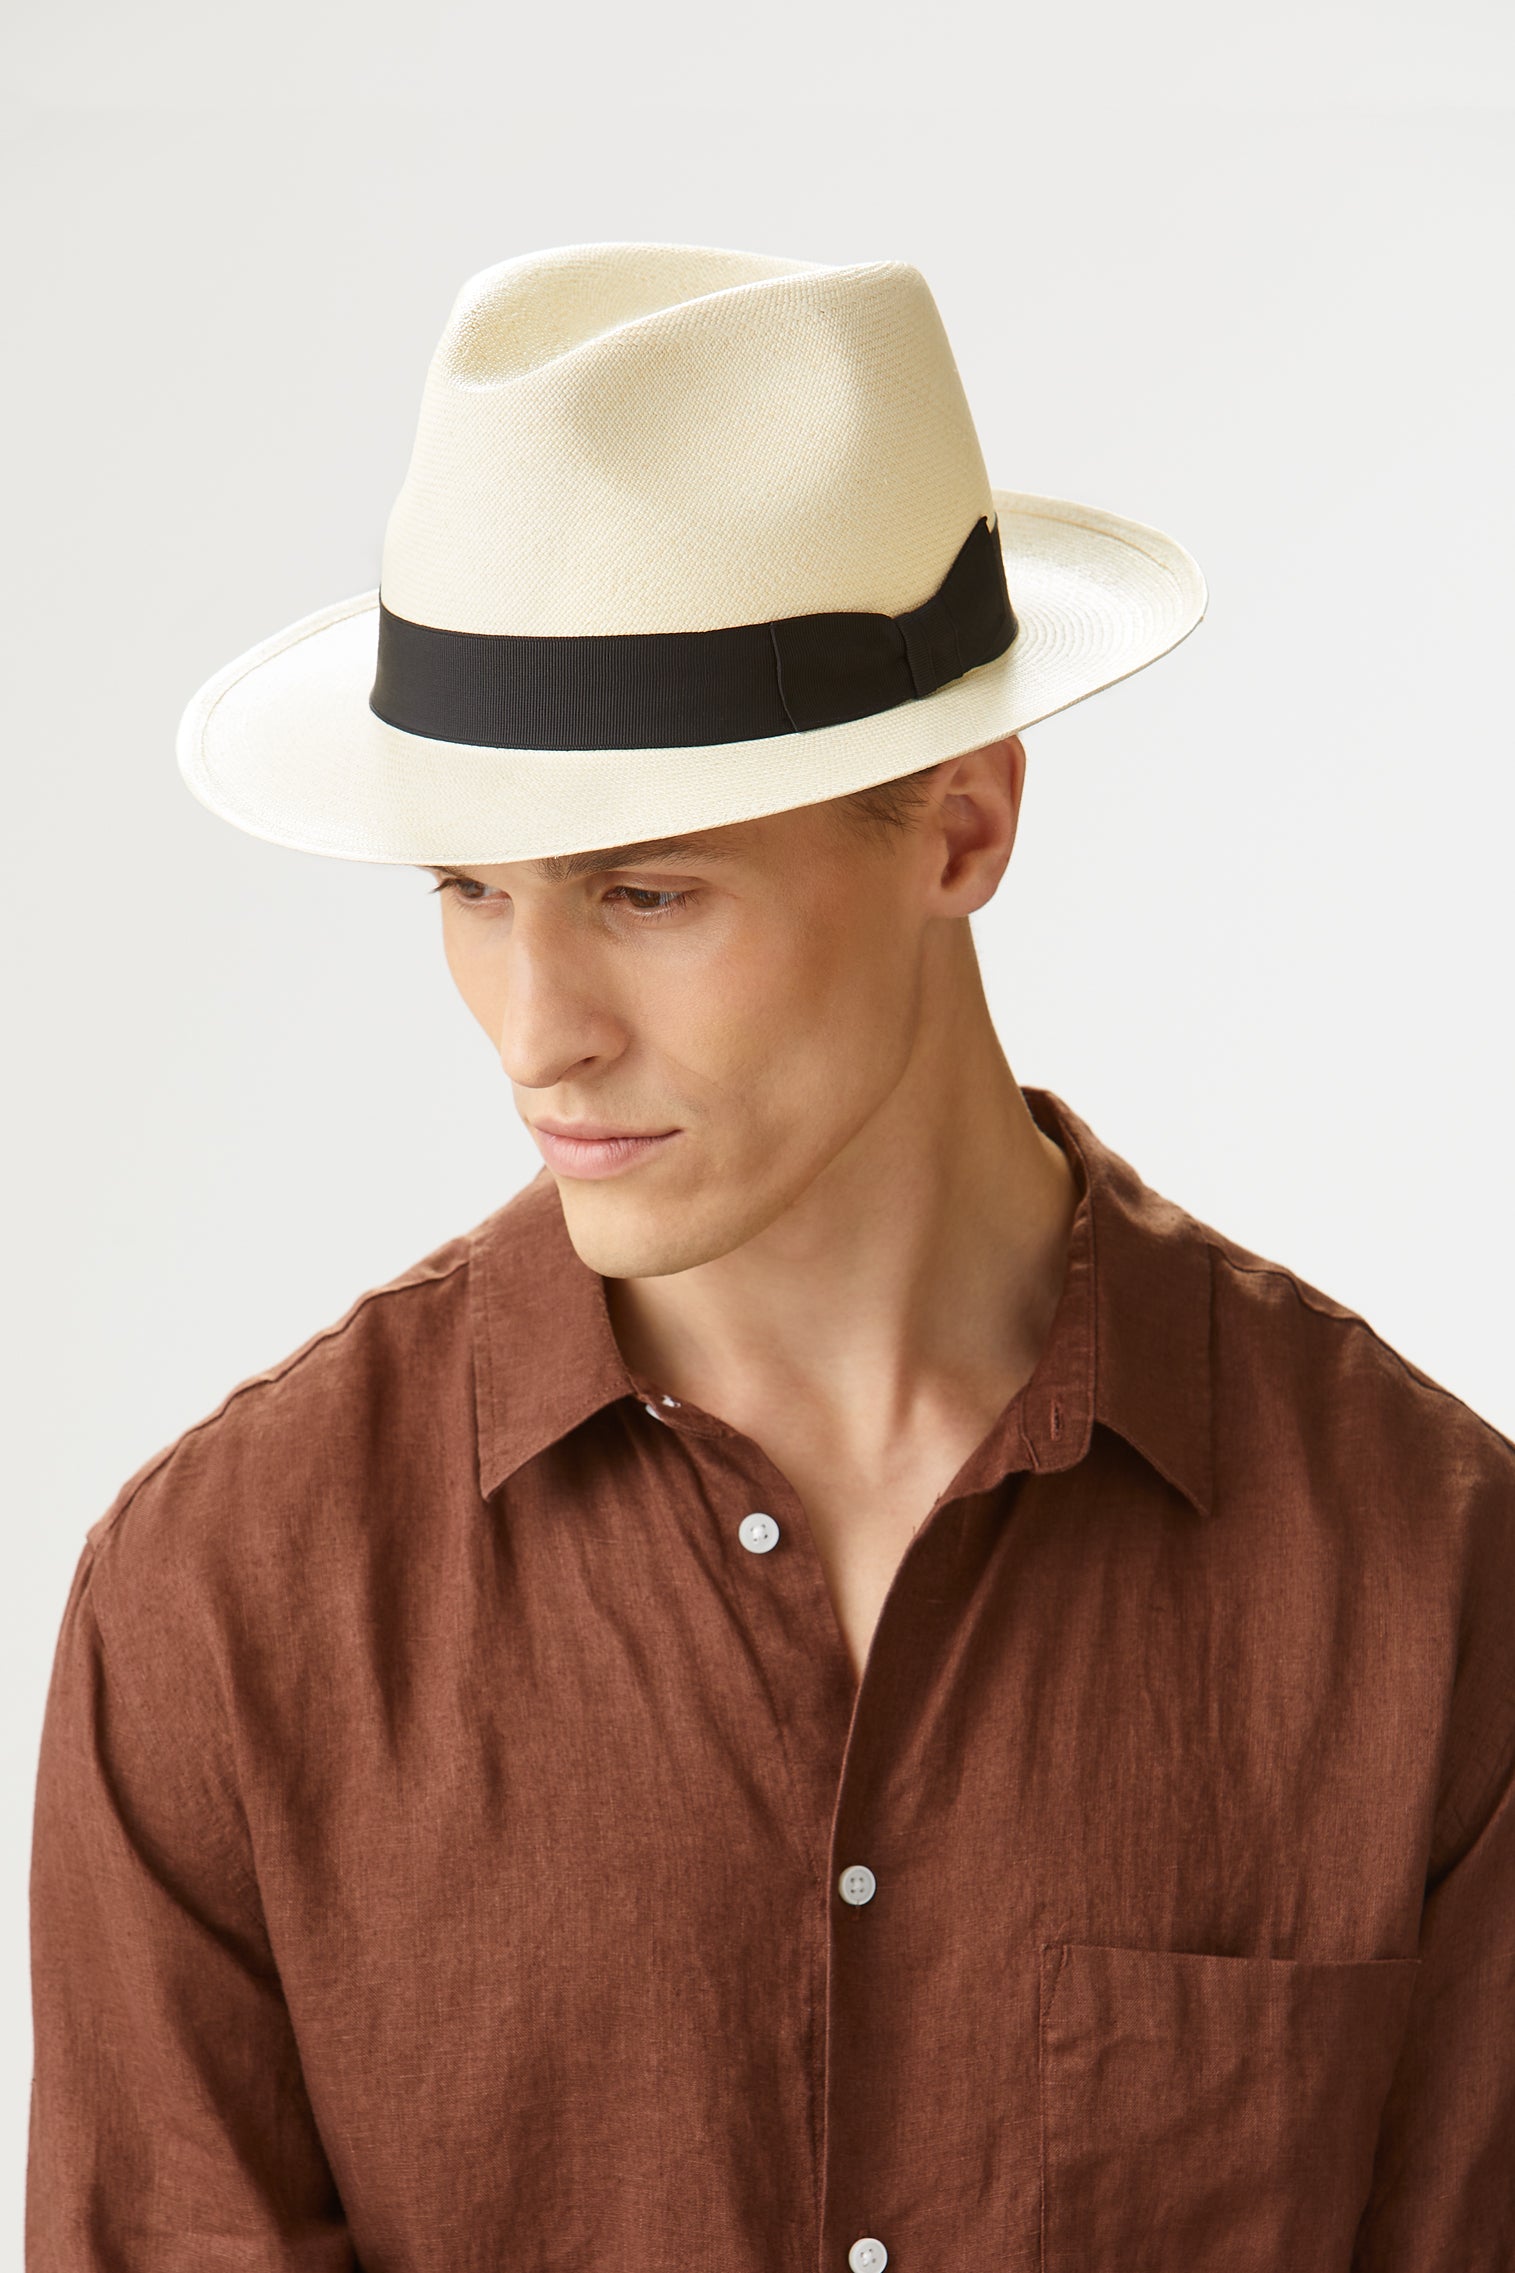 Fairbanks Panama - Panamas, Straw and Sun Hats for Men - Lock & Co. Hatters London UK